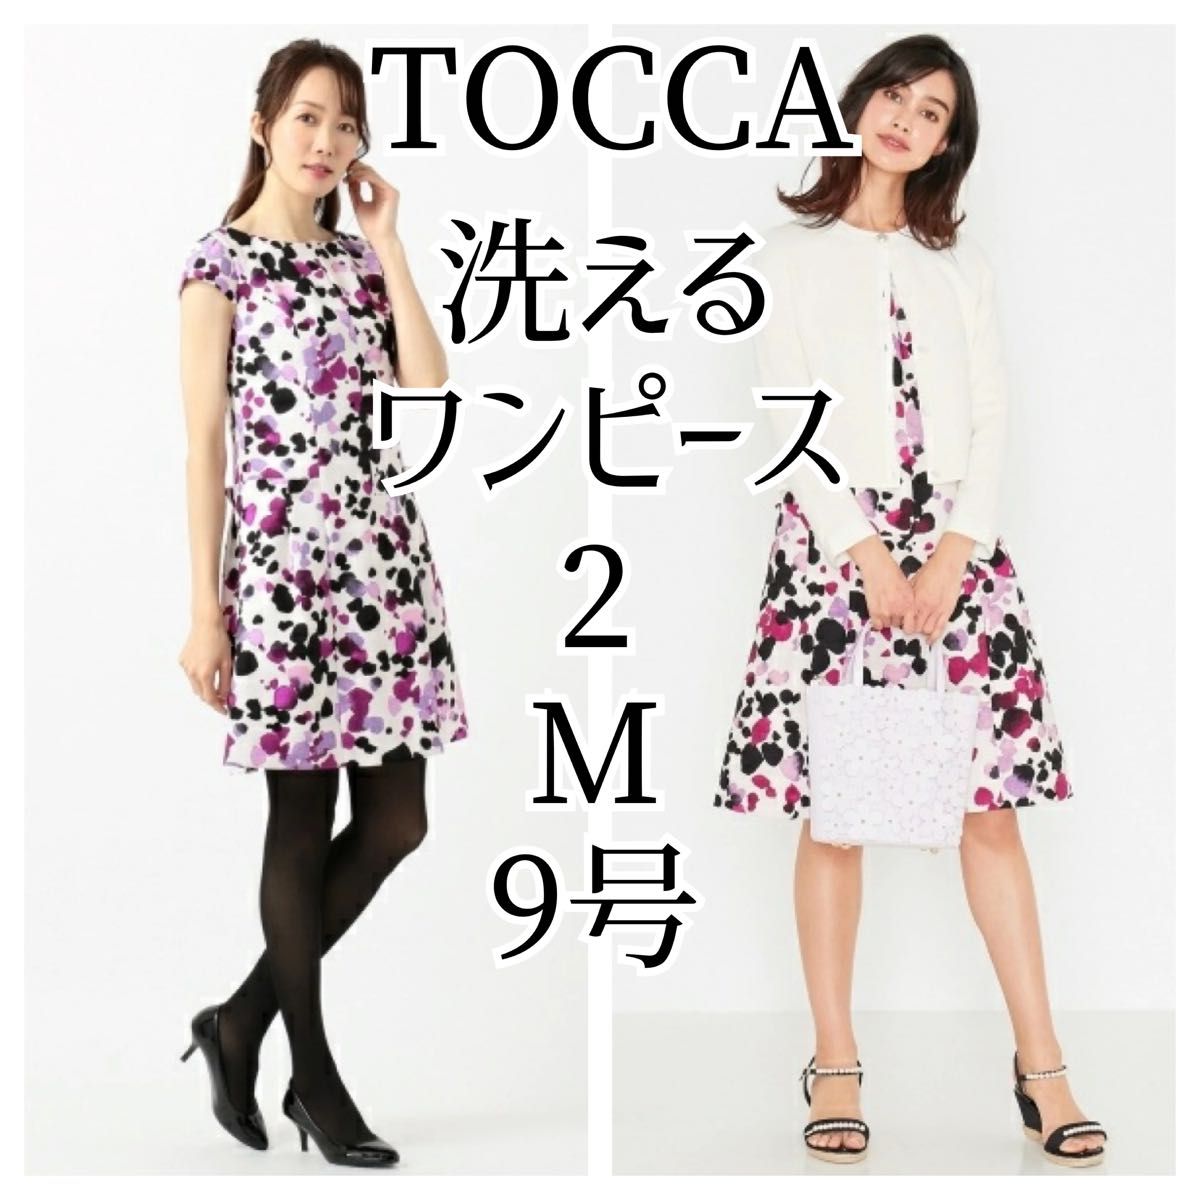 TOCCA 洗える POOL ドレス 2 M 9号 ピンク 半袖ワンピース 膝丈 定価39600円 トッカ ウォッシャブル